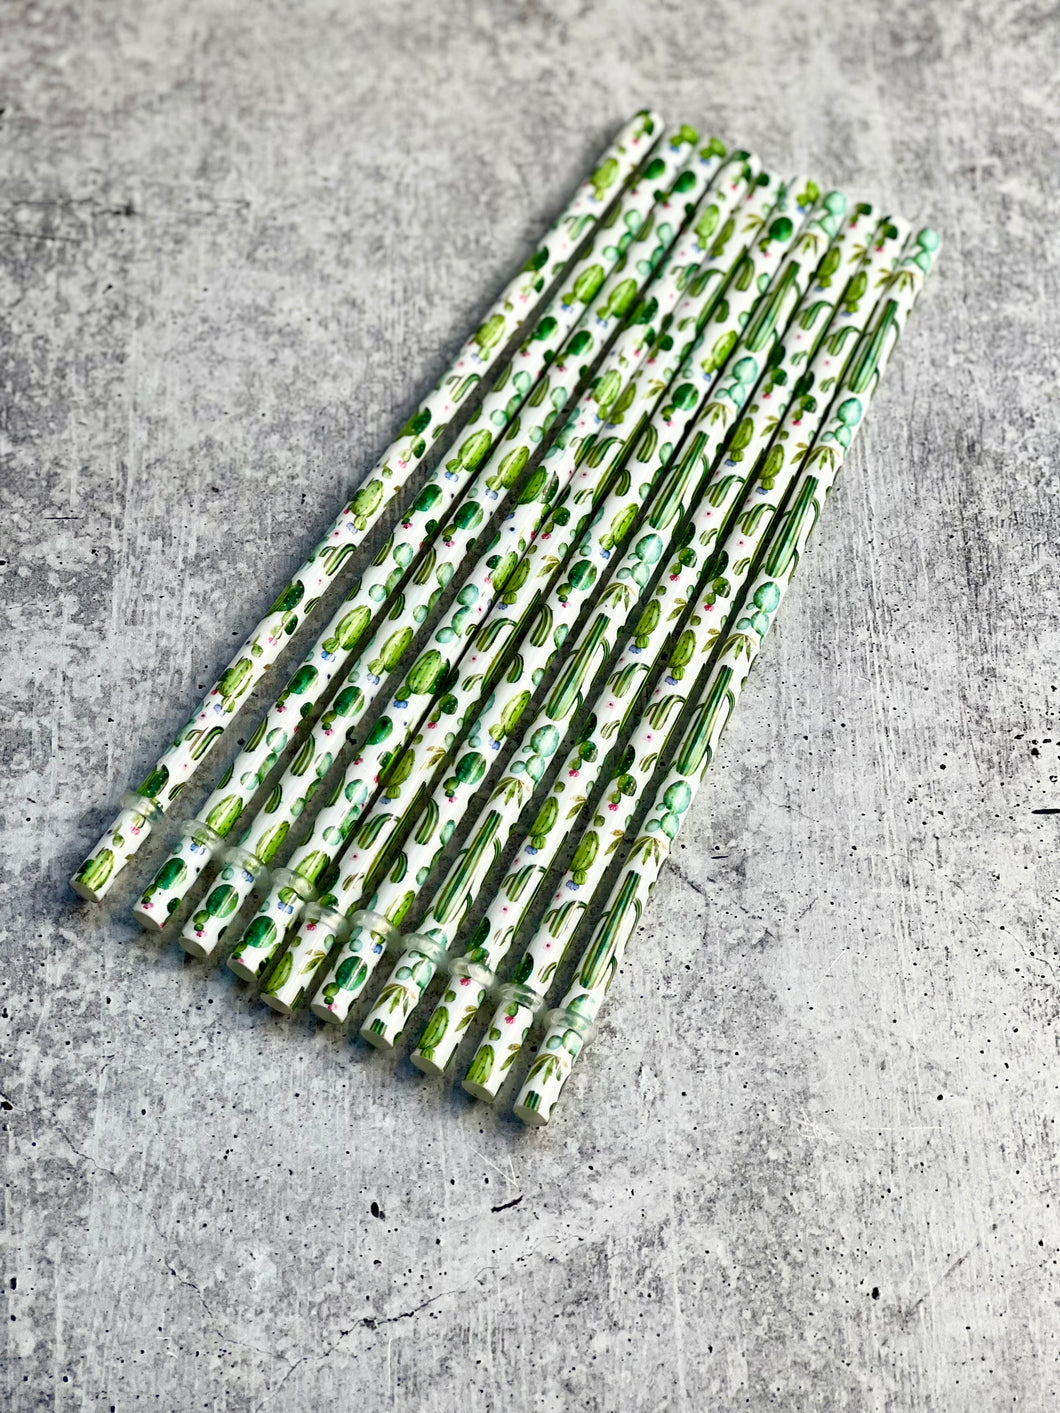 CLEARANCE - 10 - Cactus Print Reusable Plastic Straws - 9